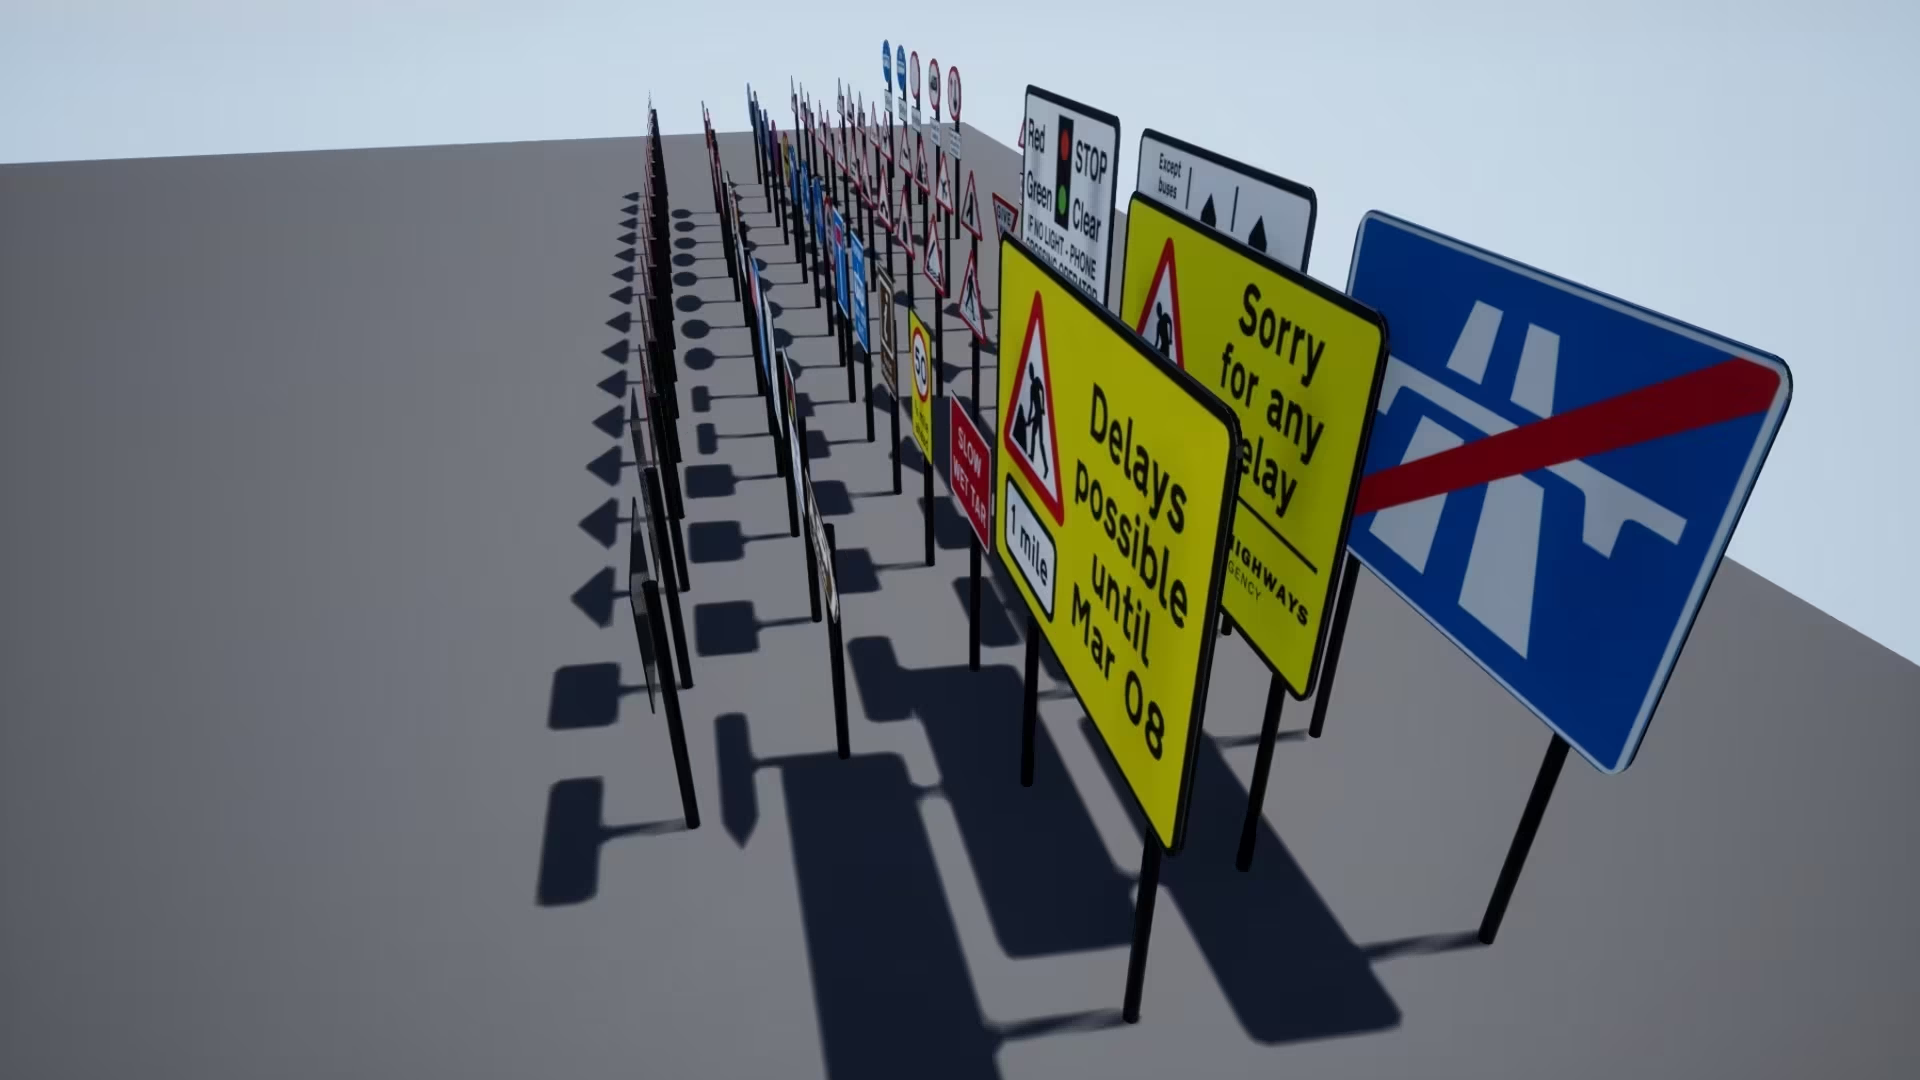 UE4虚幻4 UK Road Signs 英国道路路牌交通指路牌道具模型 - 图1